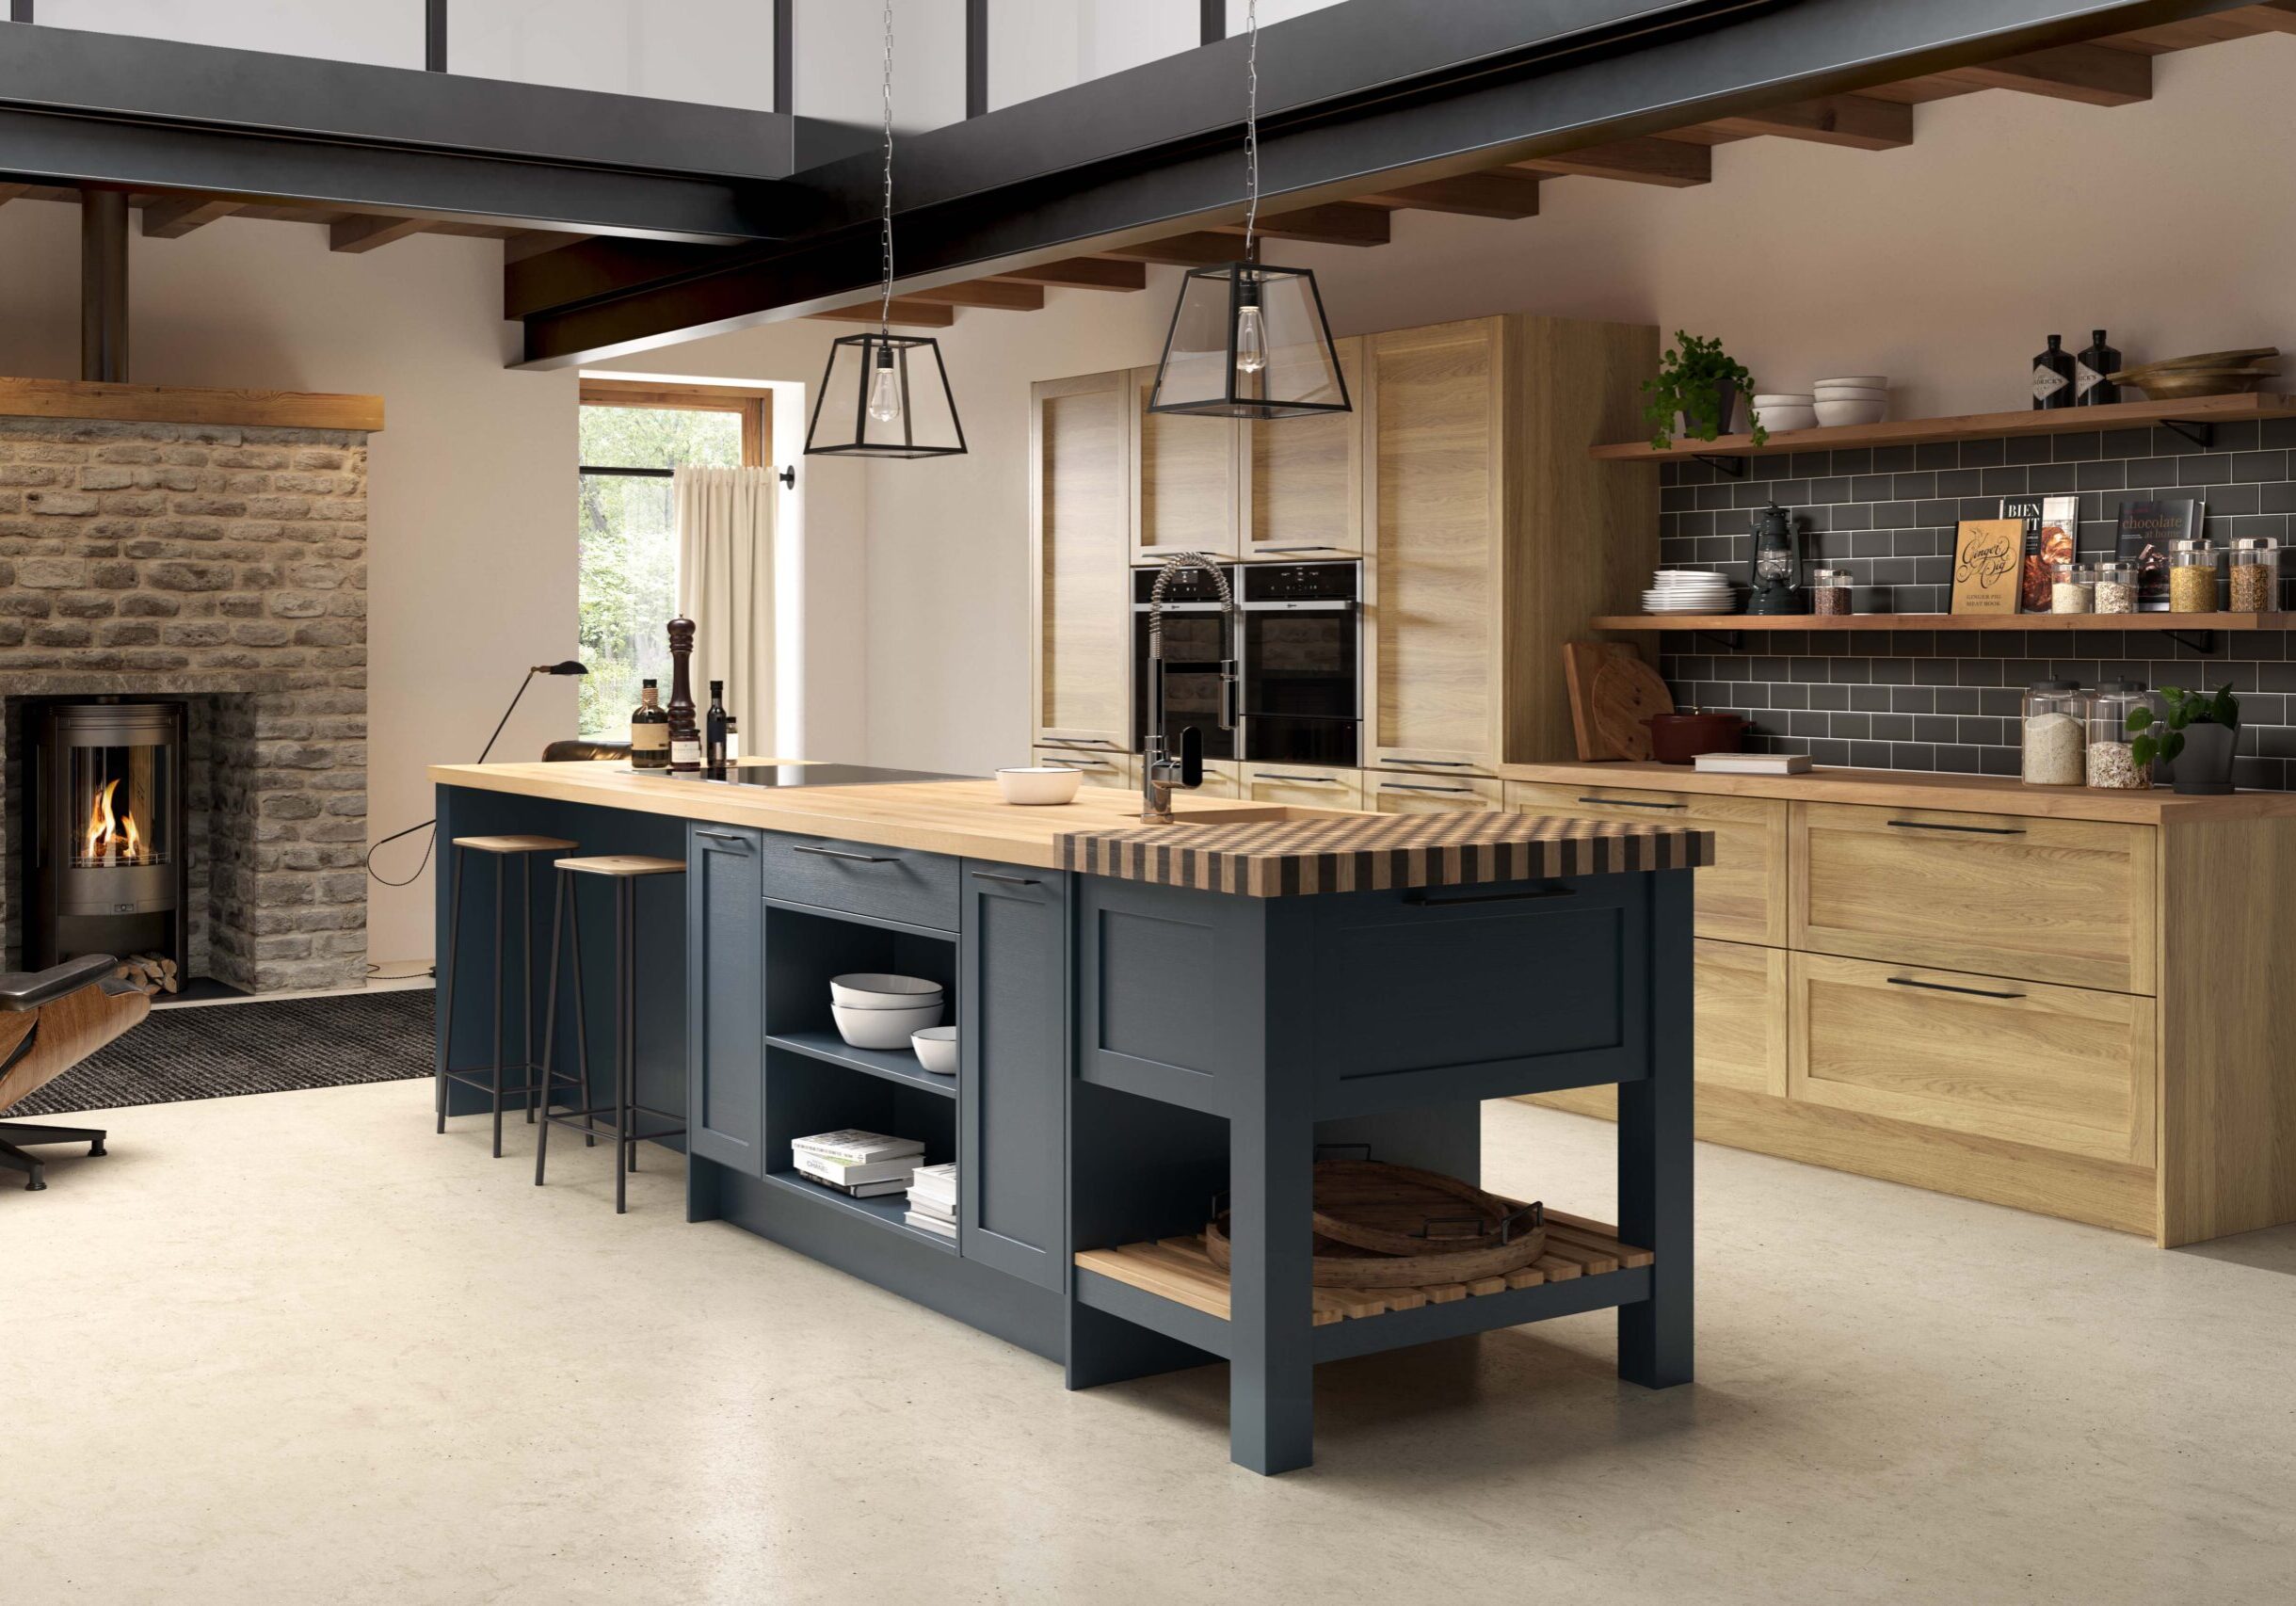 award-winning kitchens Cornwall blue kitchen colour